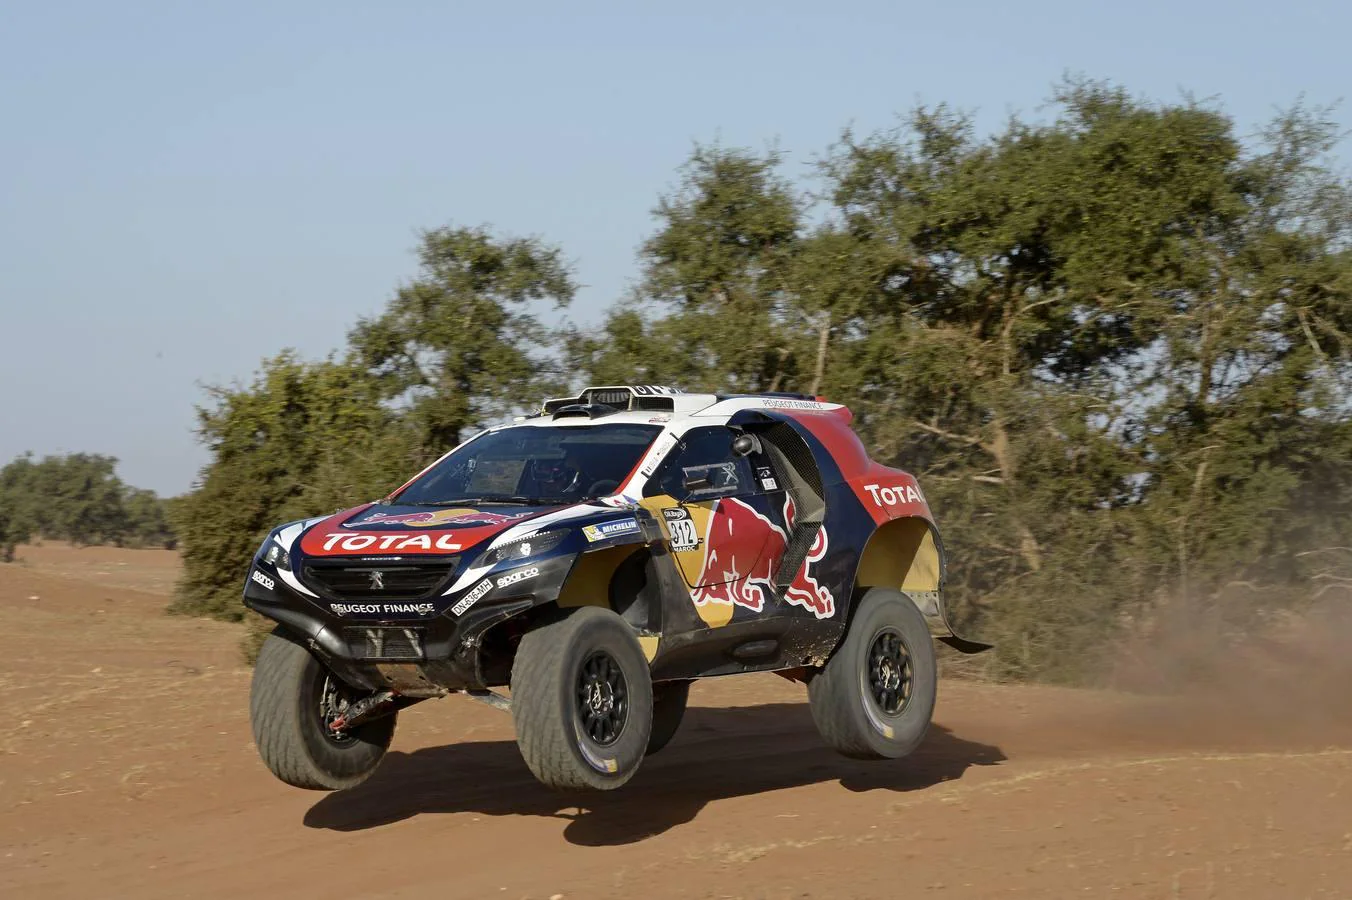 Peugeot en el Dakar